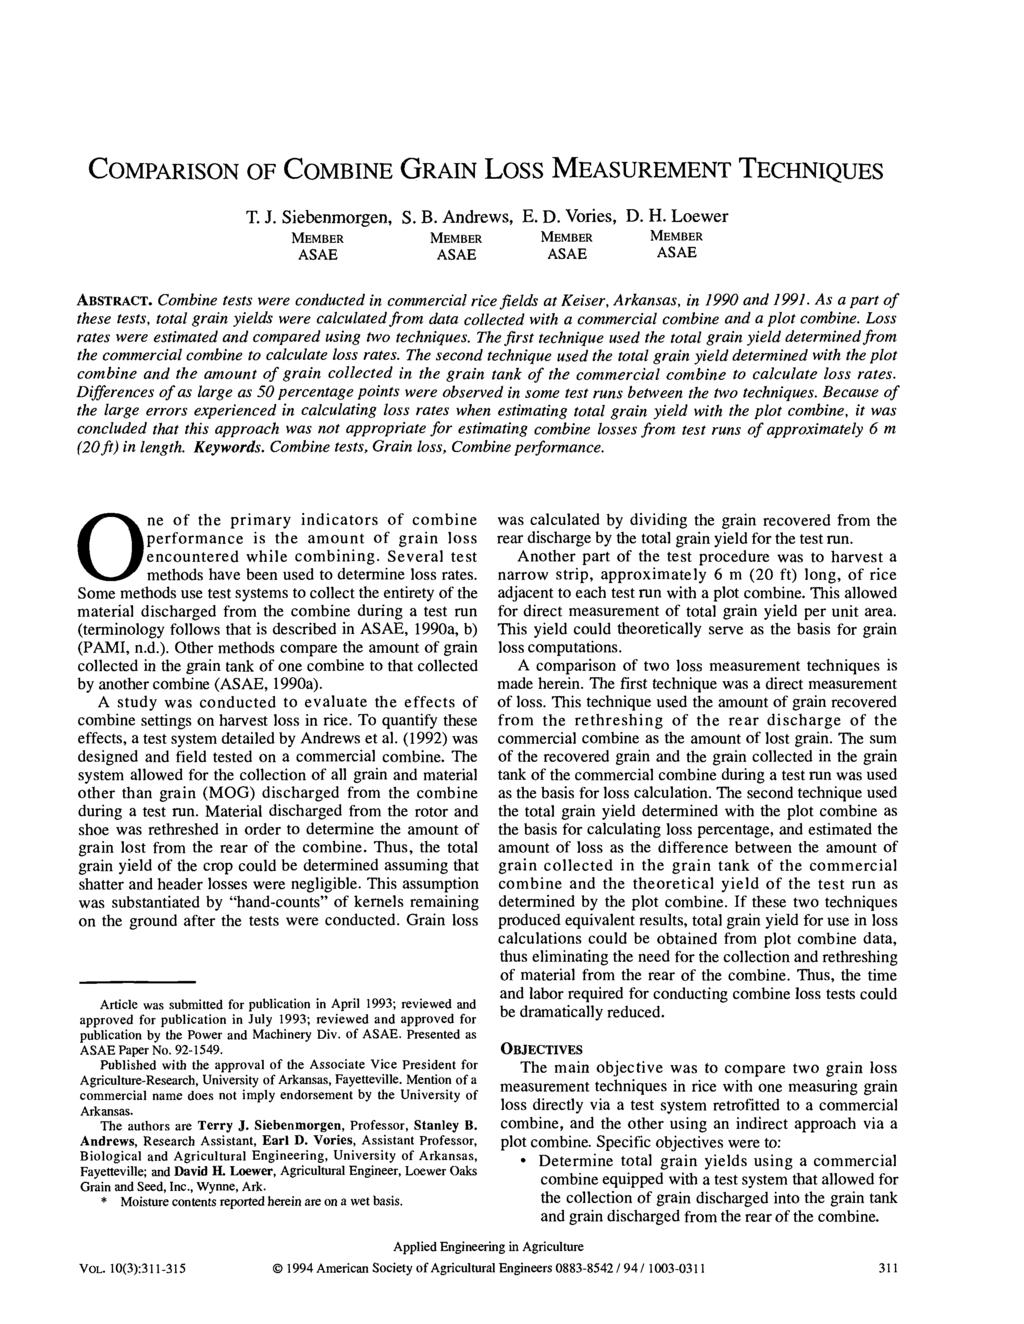 COMPARISON OF COMBINE GRAIN LOSS MEASUREMENT TECHNIQUES T. J. Siebenmorgen, S. B. Andrews, E. D. Vories, D. H. Loewer MEMBER MEMBER MEMBER MEMBER ASAE ASAE ASAE ASAE ABSTRACT.